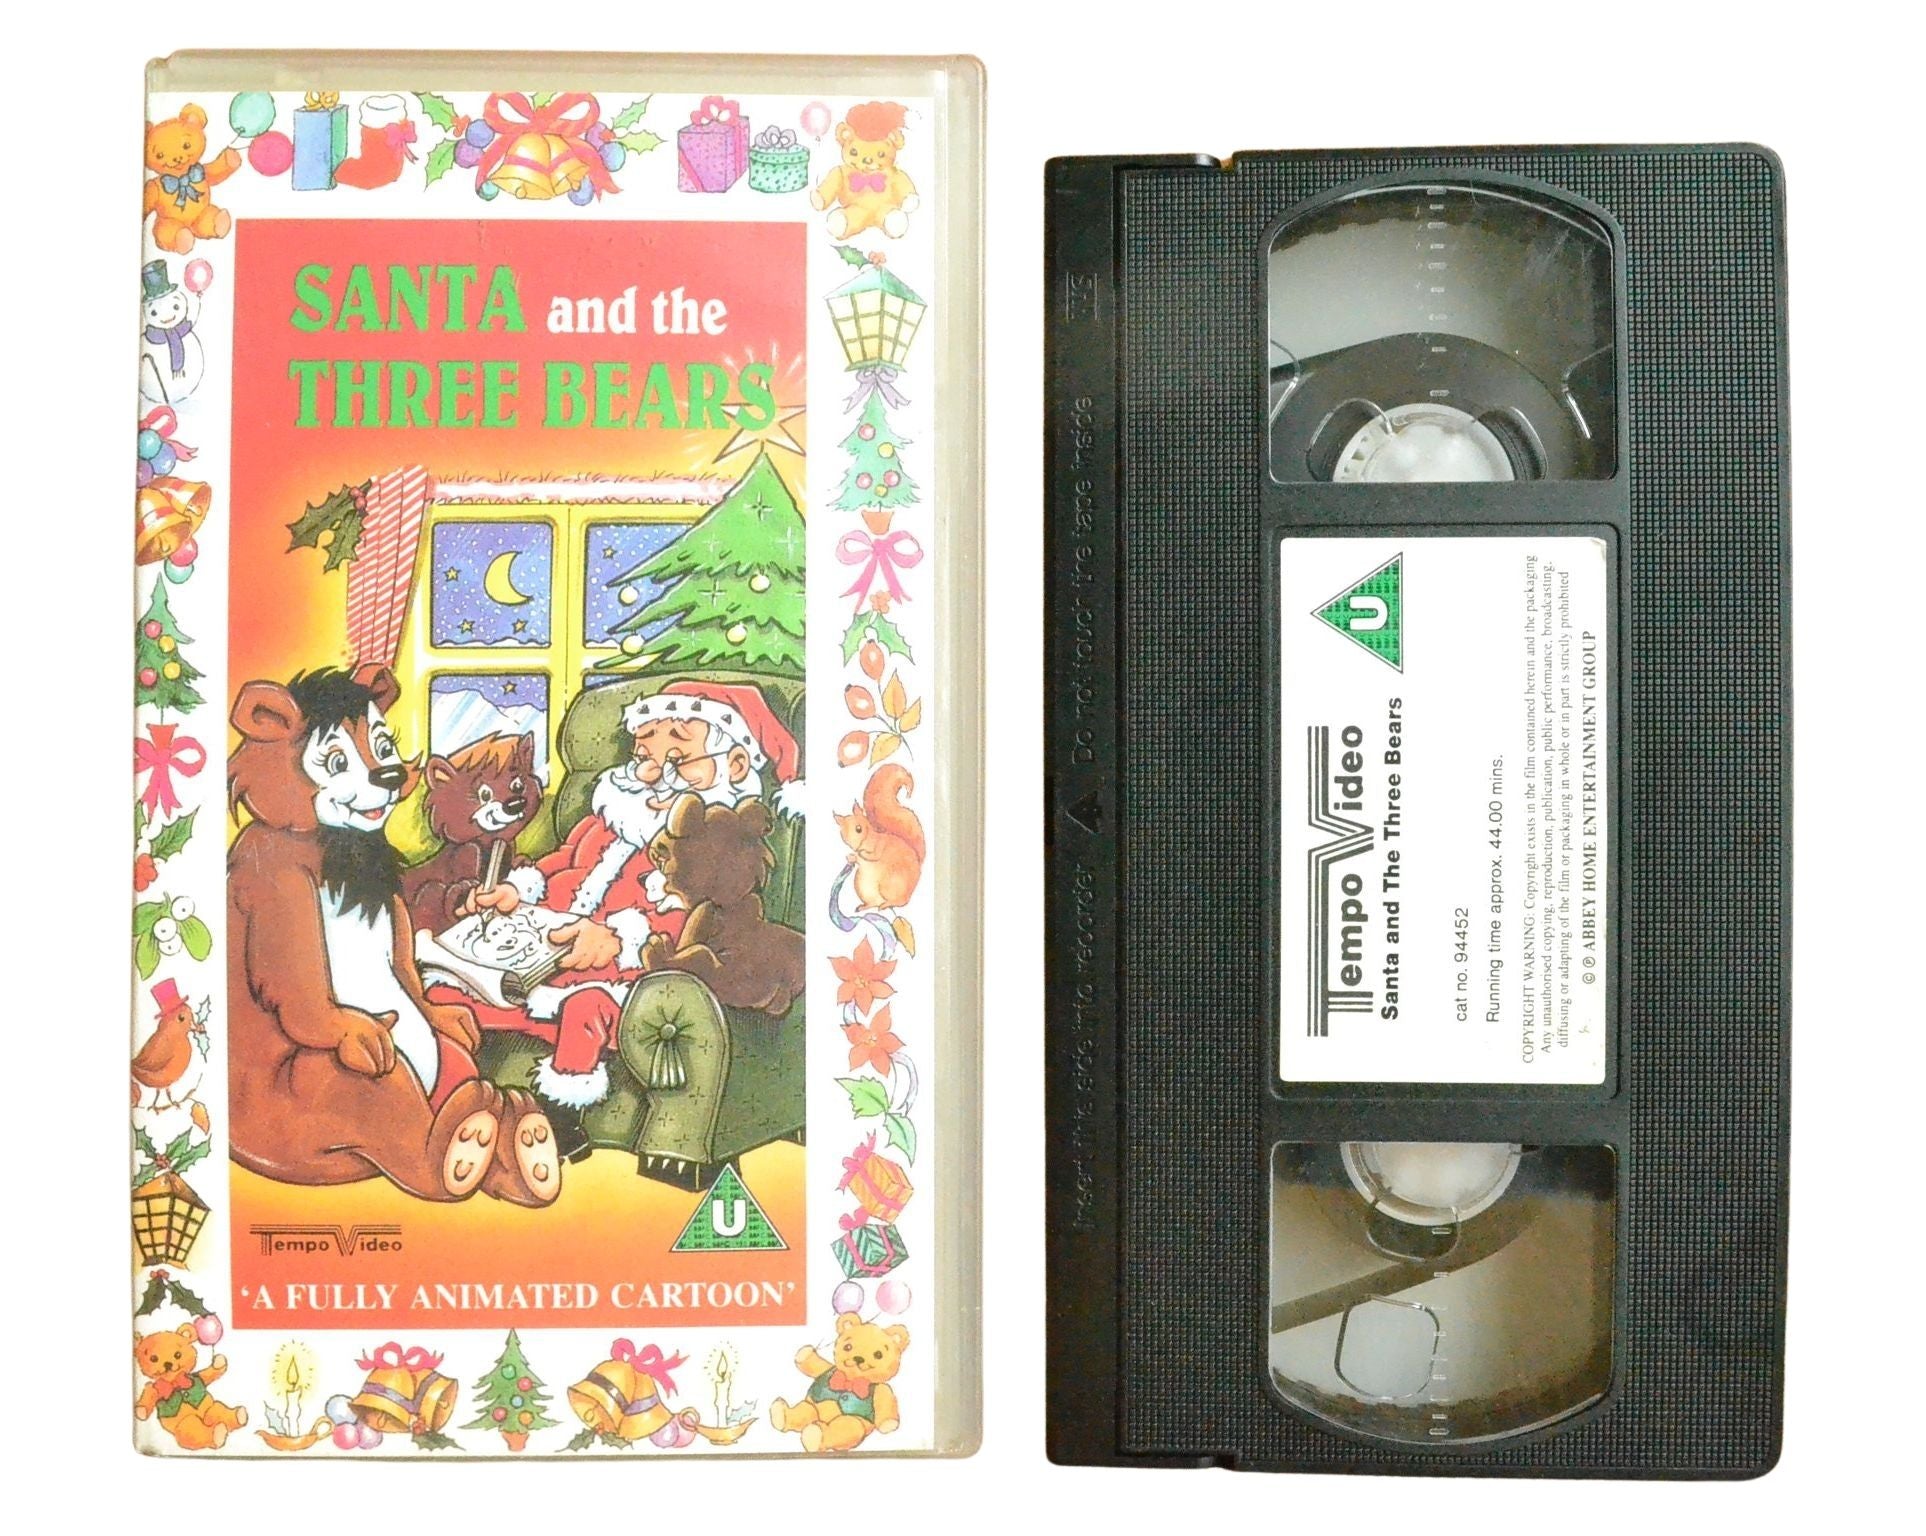 Santa and the Three Bears - Tony Benedict - Children’s - Pal VHS-